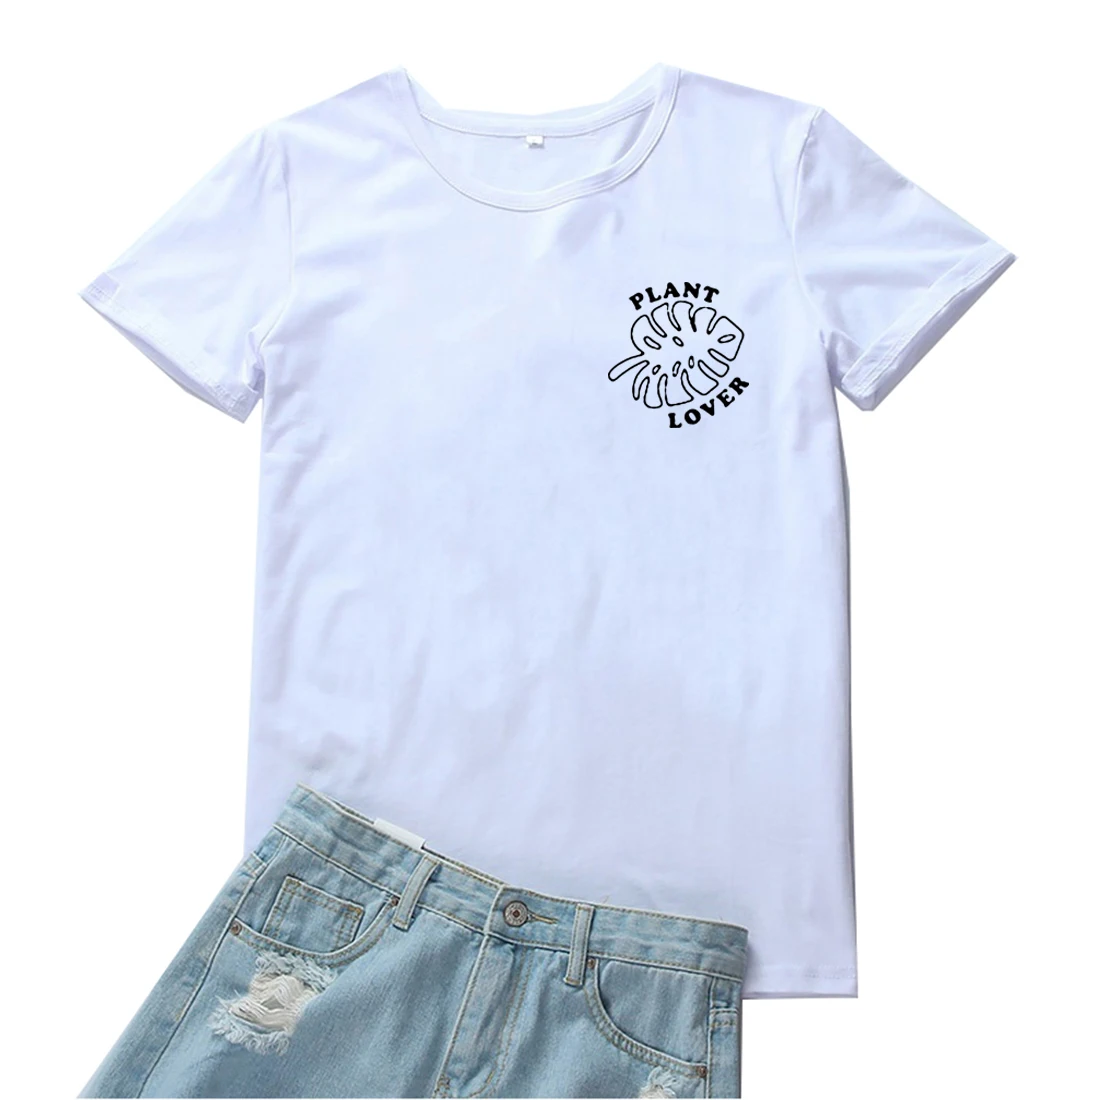 

Plant Lover Tee Shirt Femme Fashion Harajuku Print Tops Camiseta Mujer Loose Short Sleeves Women T Shirts Grunge Aesthetic